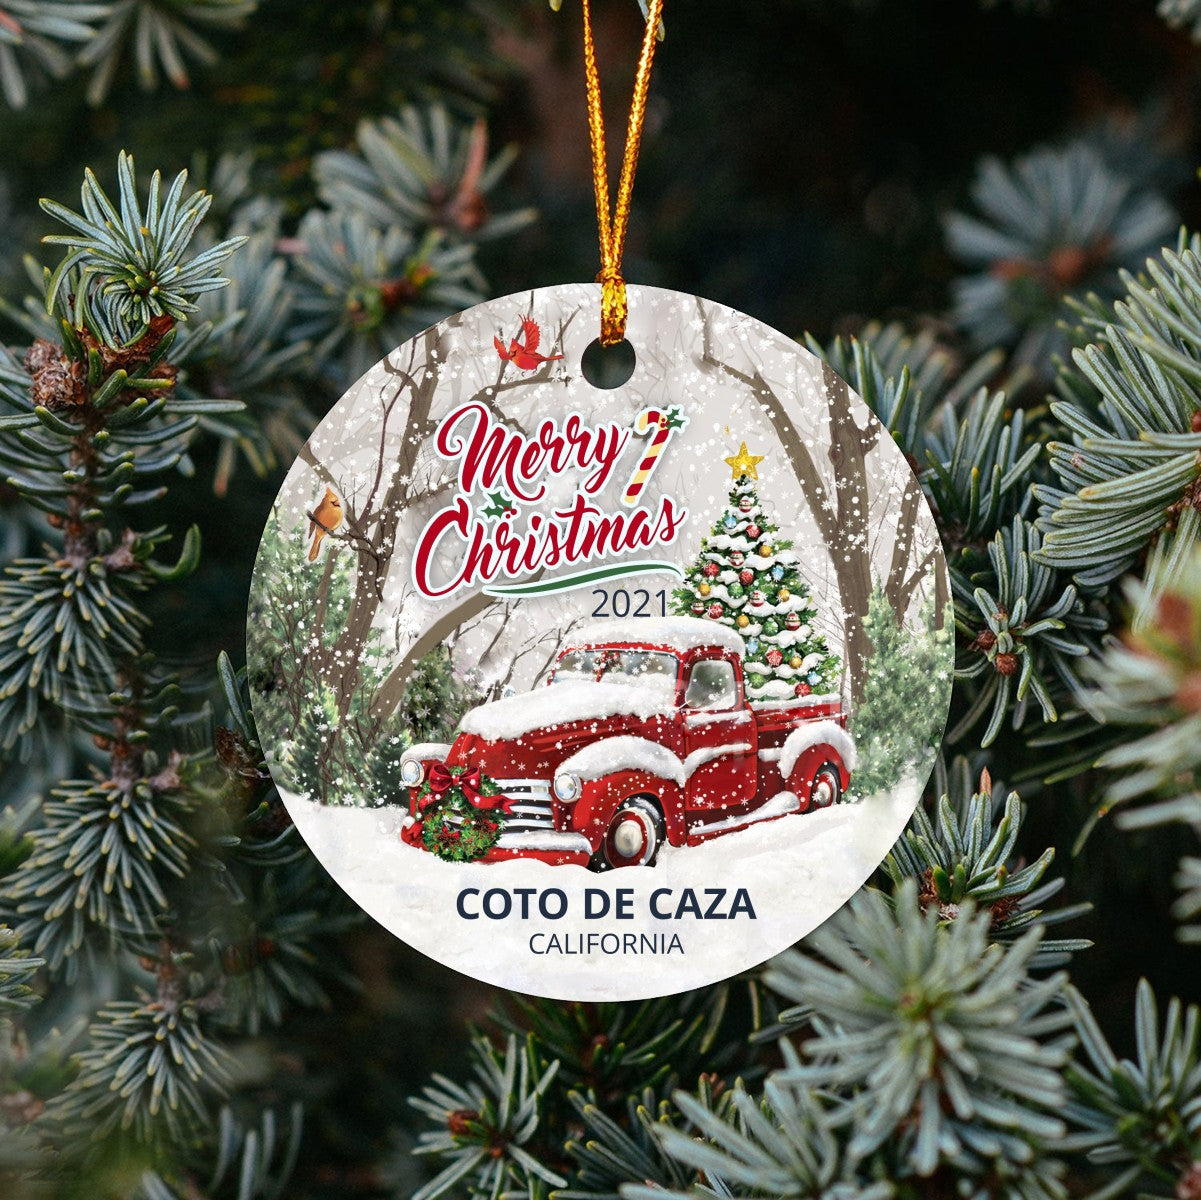 Christmas Tree Ornaments Coto de Caza - Ornament With Name City, State Coto de Caza California CA Ornament - Red Truck Xmas Ornaments 3'' Plastic Gift For Family, Friend And Housewarming